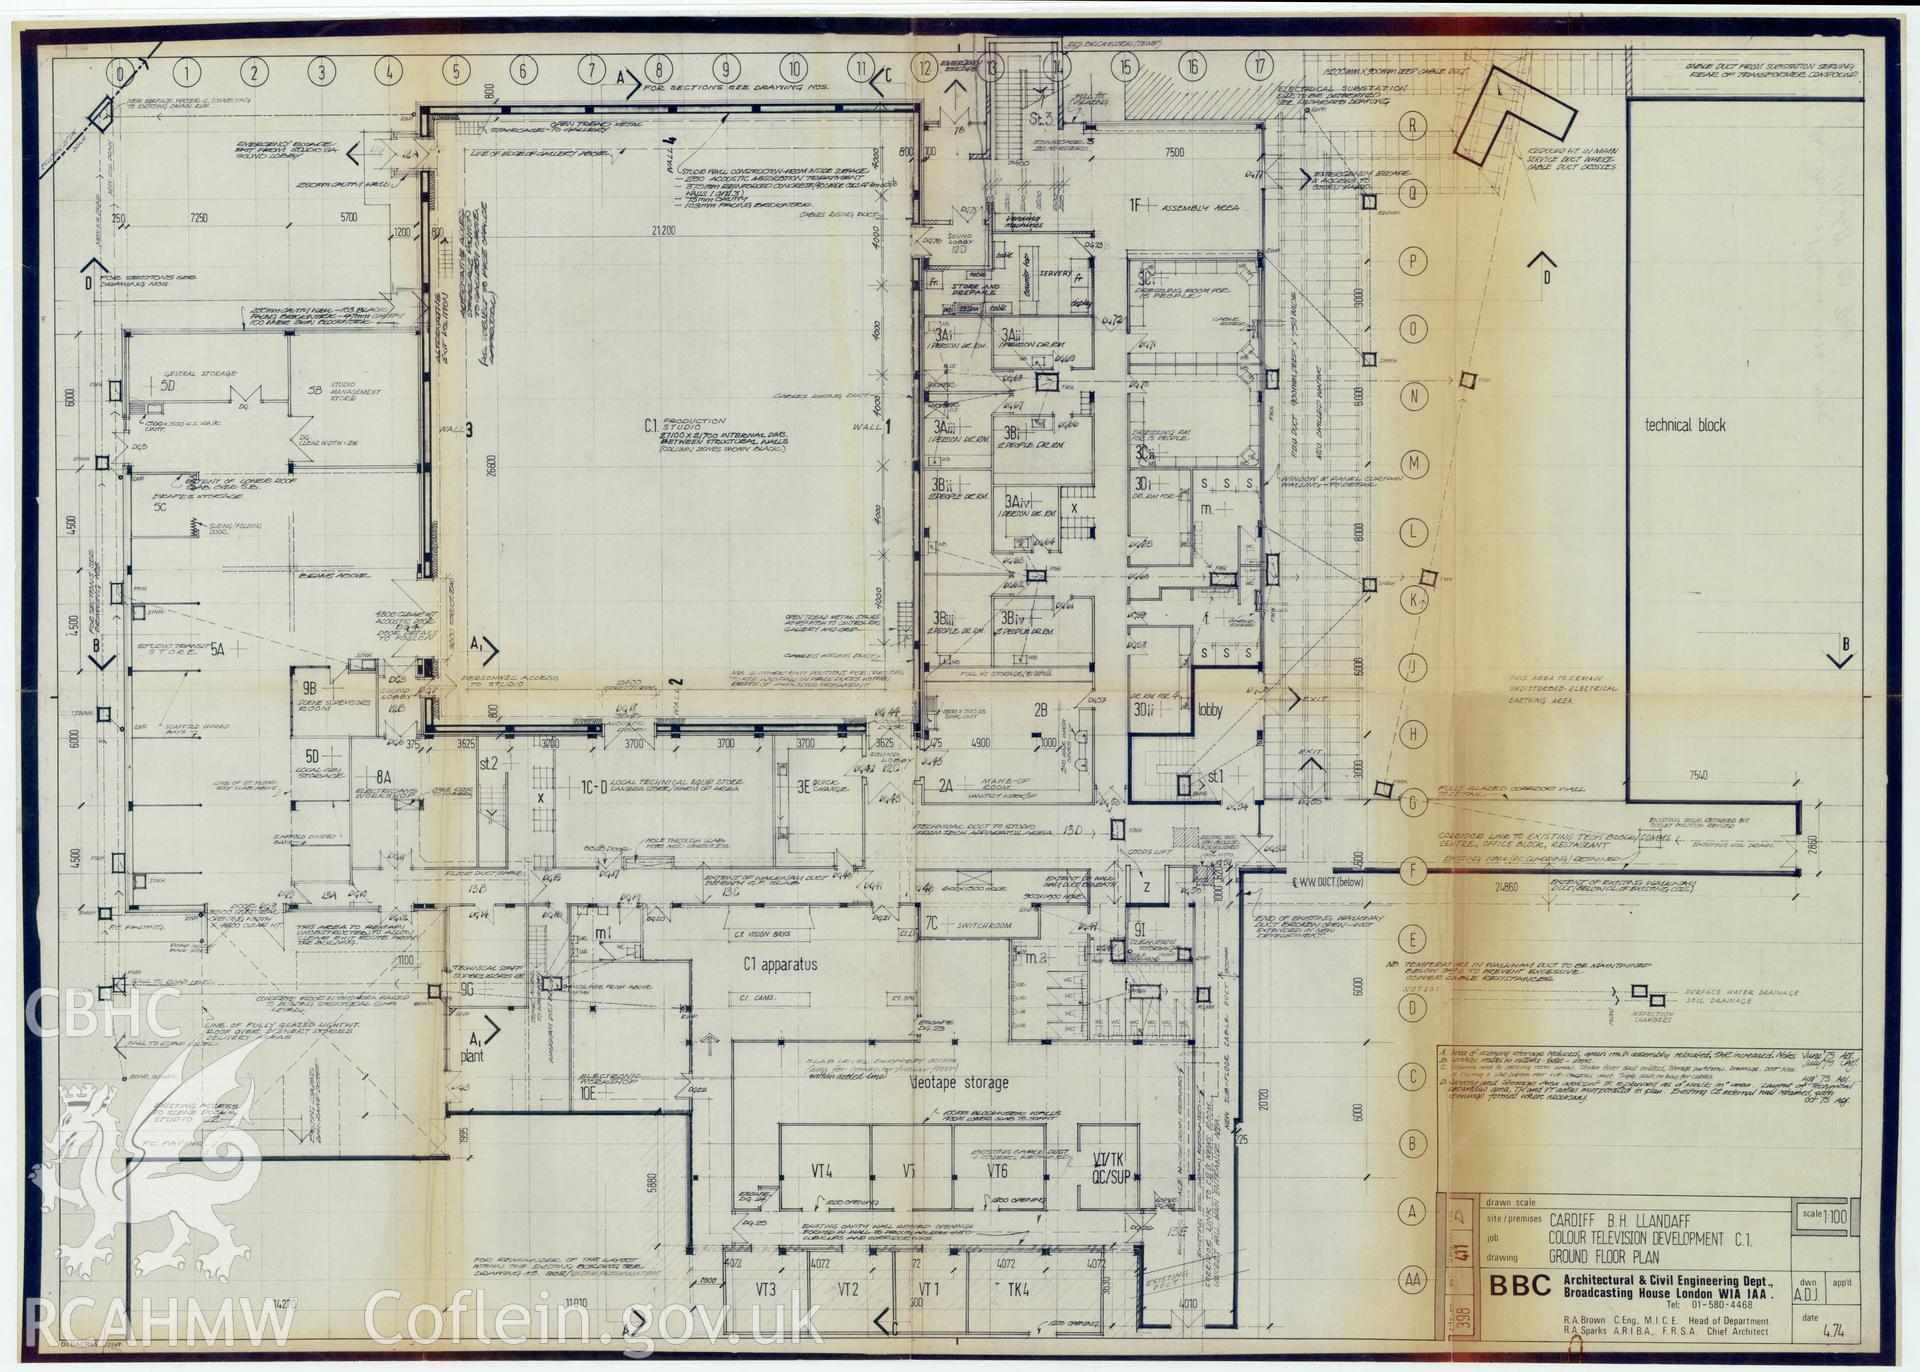 Digitised drawing plan of Llandaff production studio C1 - Colour TV development. Ground floor plan. Drawing no. 411D, April 1974.